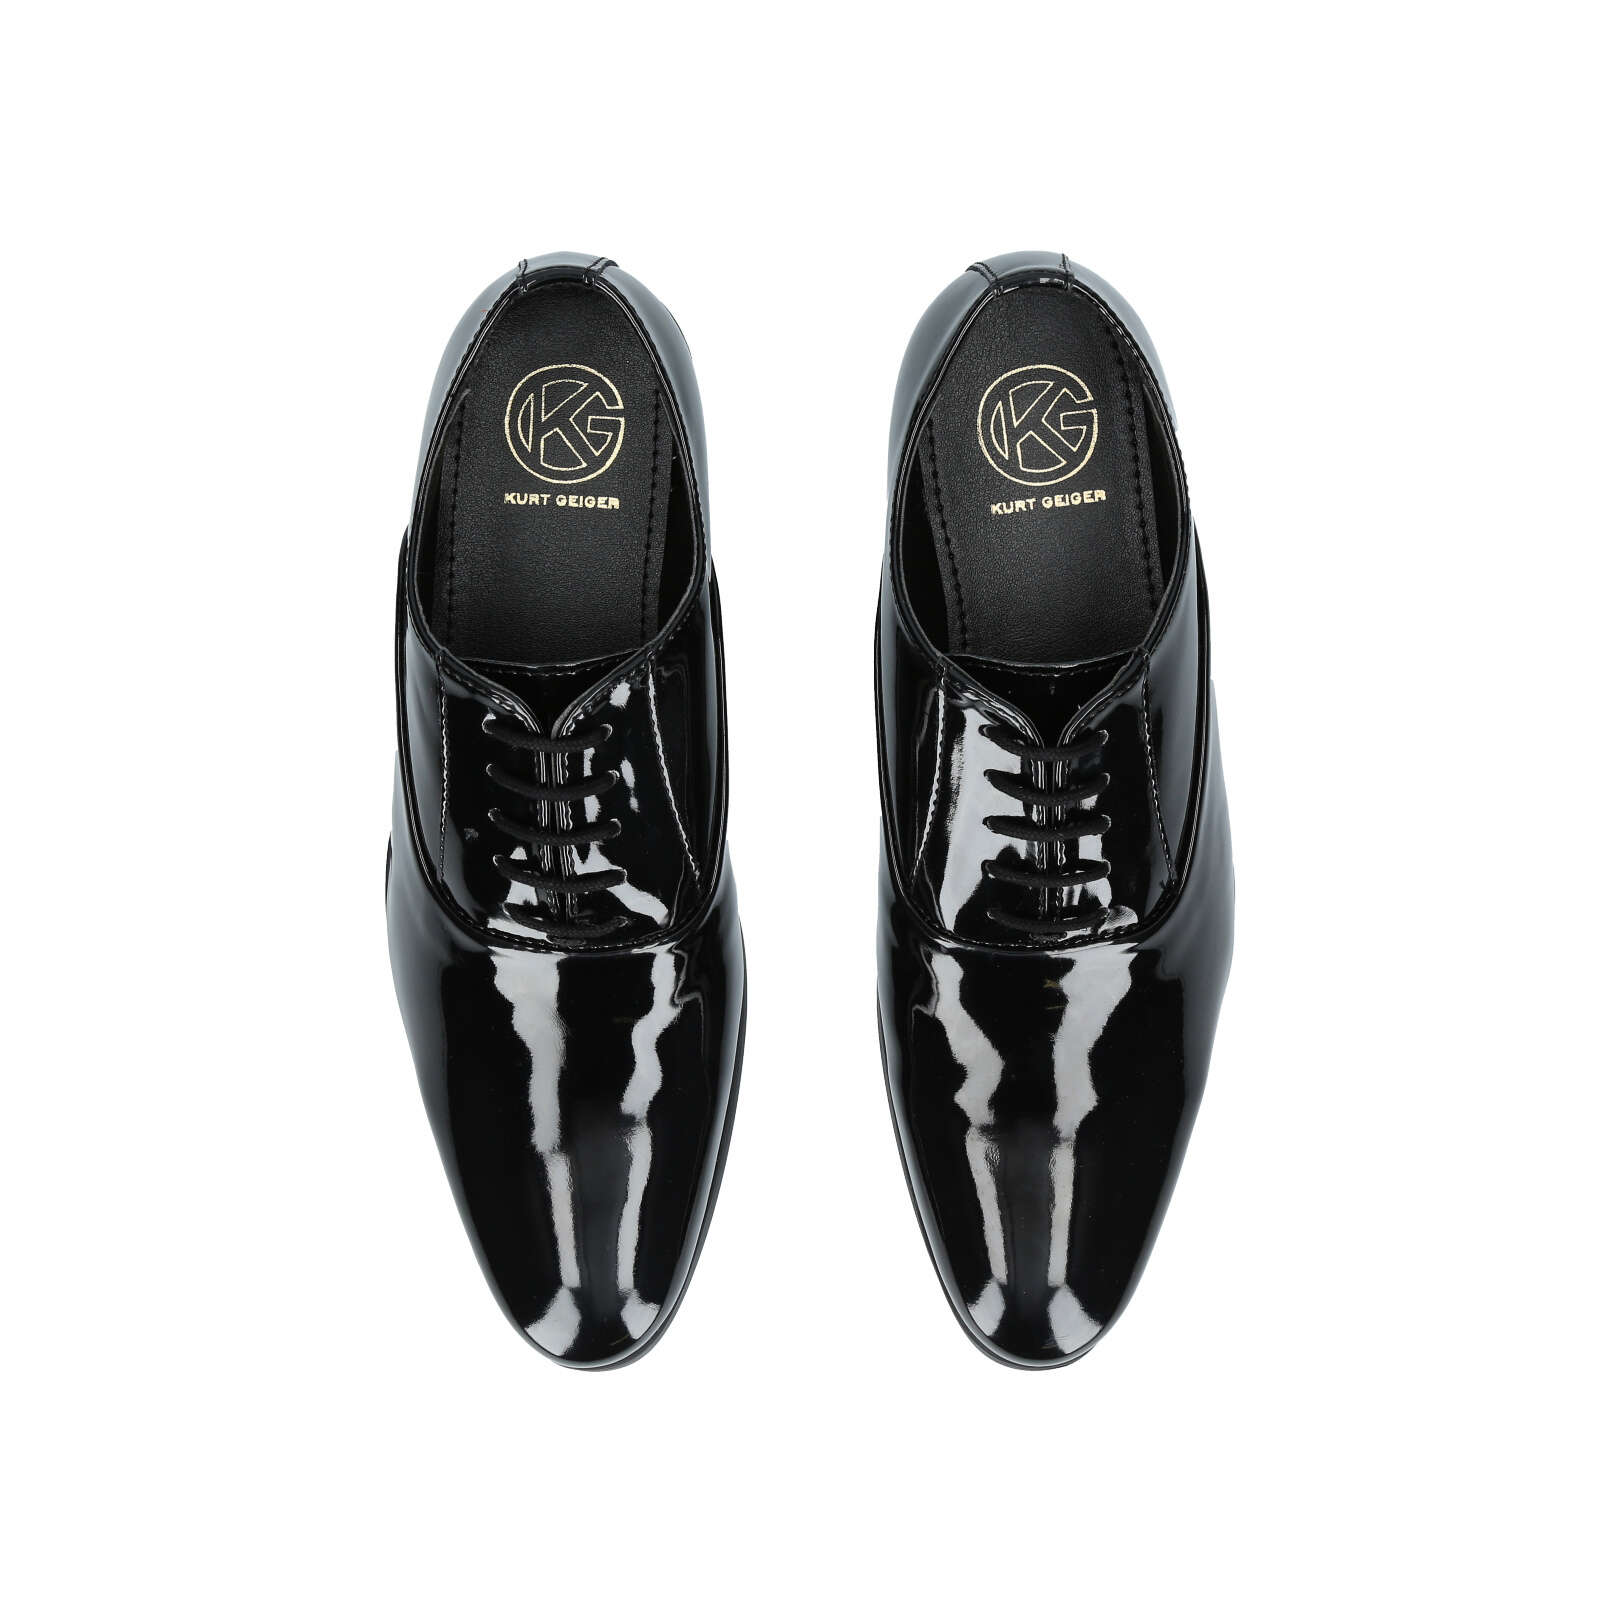 Mens Kensington Black Argentinian Leather Oxford Tie Pleated Shoes